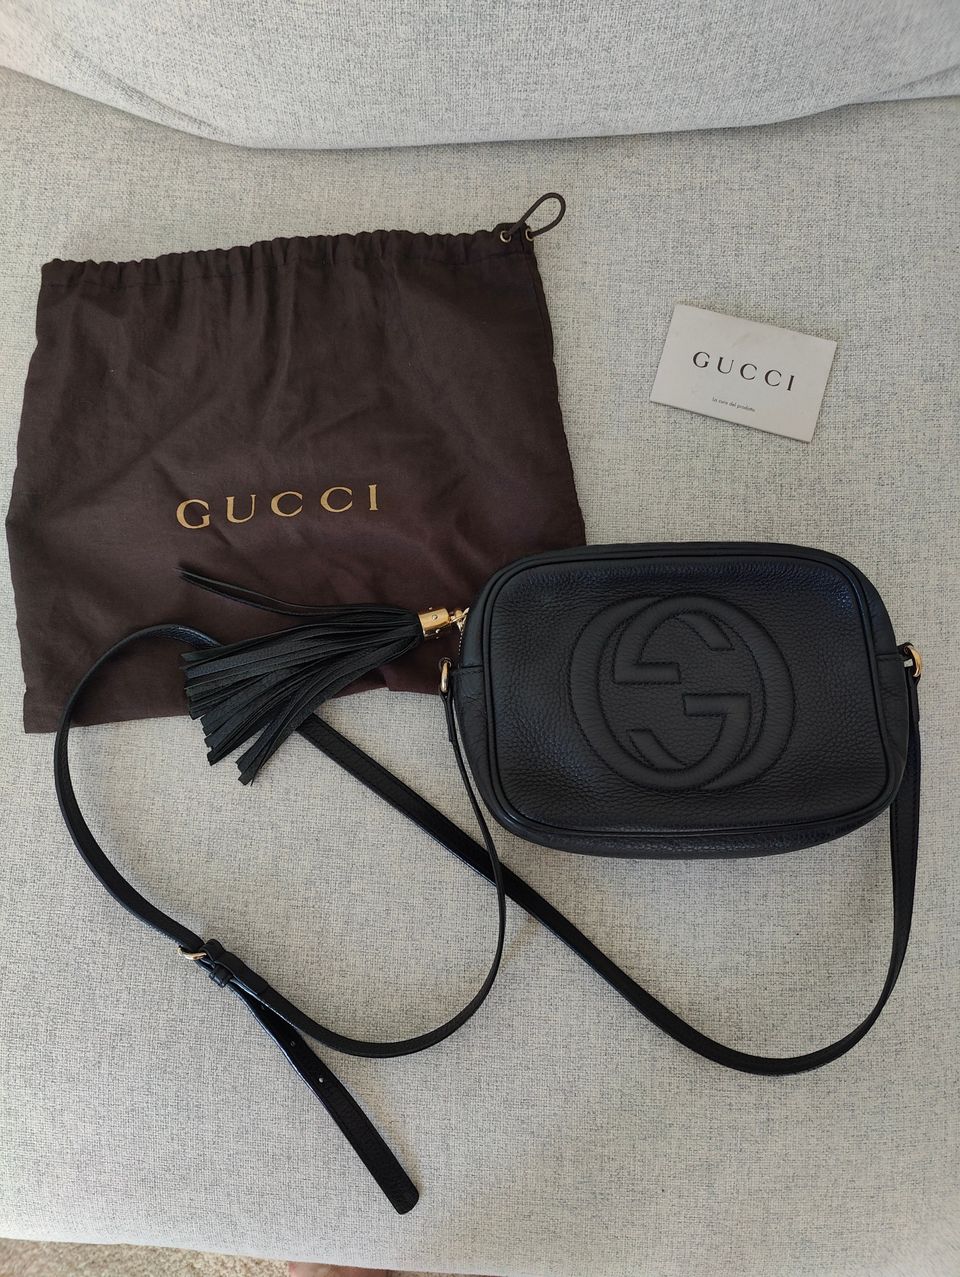 Gucci Soho Disco bag